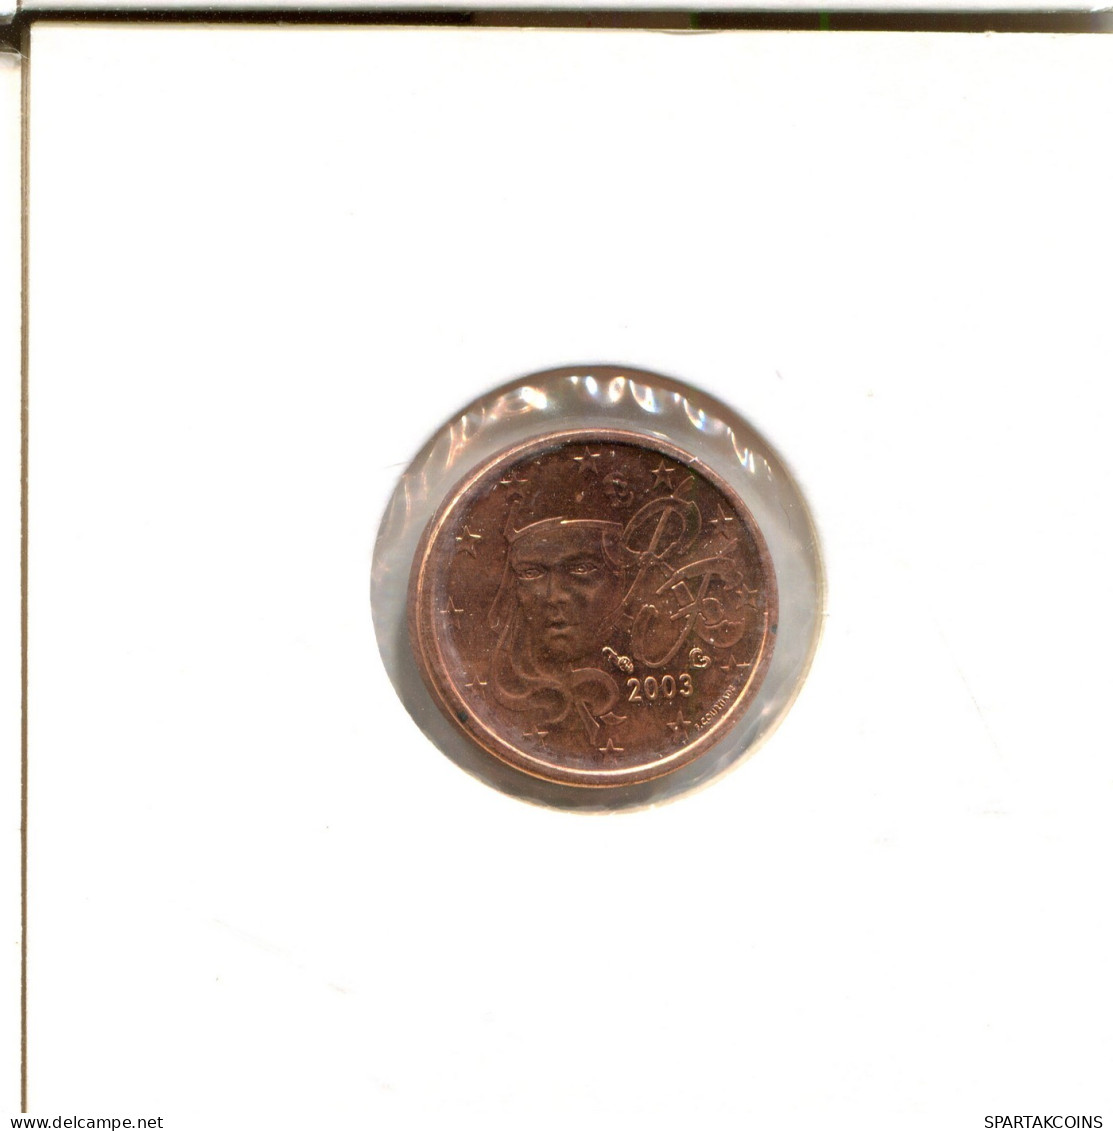 1 EURO CENT 2003 FRANCIA FRANCE Moneda #EU093.E.A - France